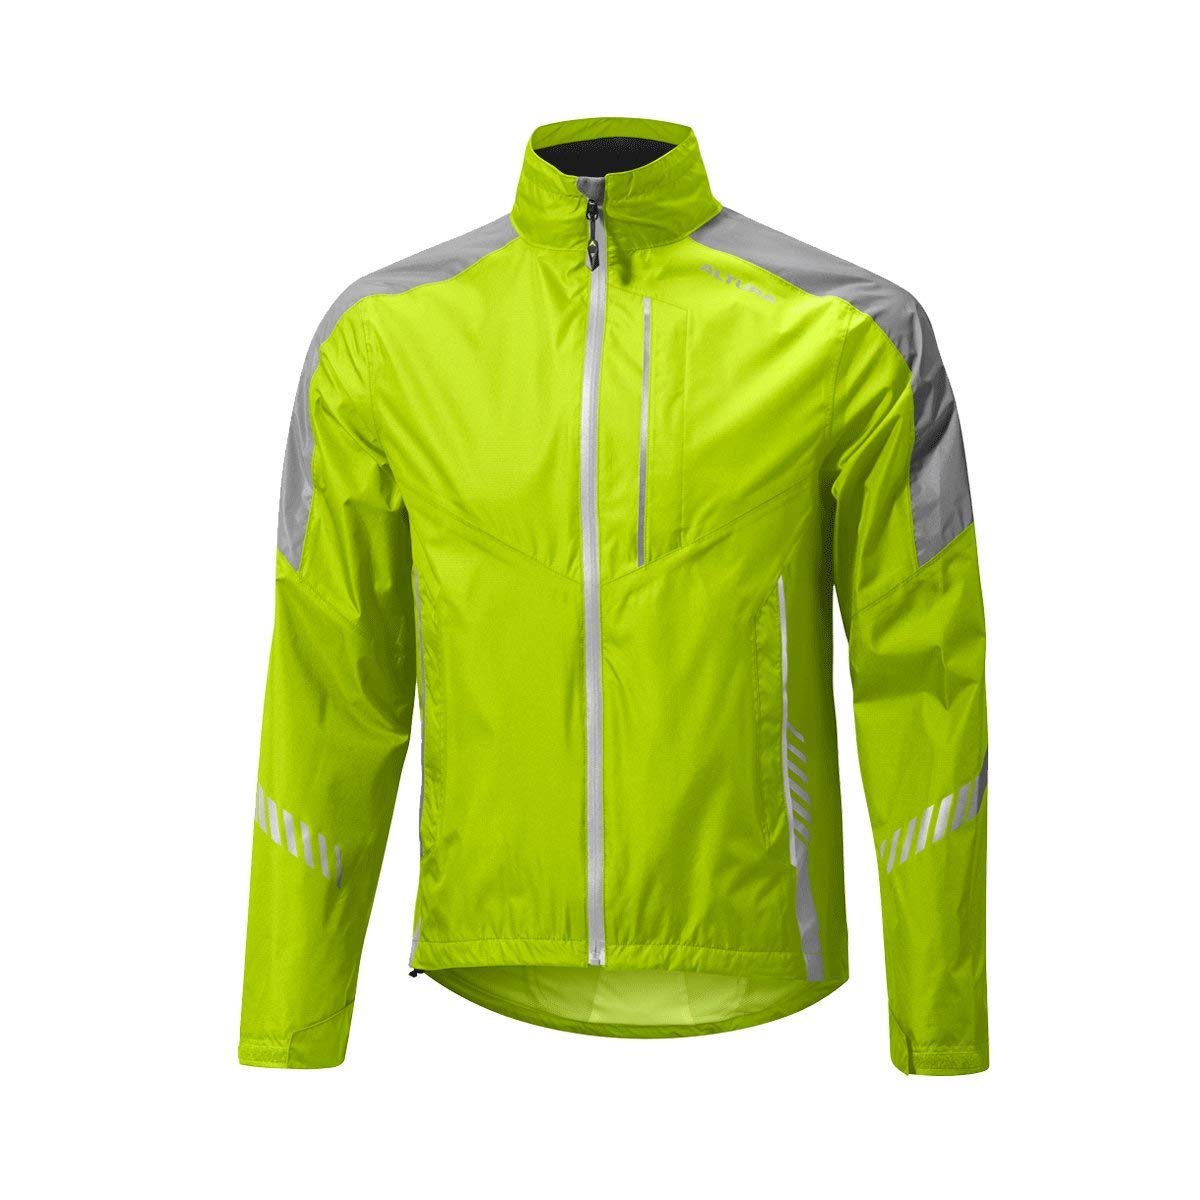 waterproof cycling jacket